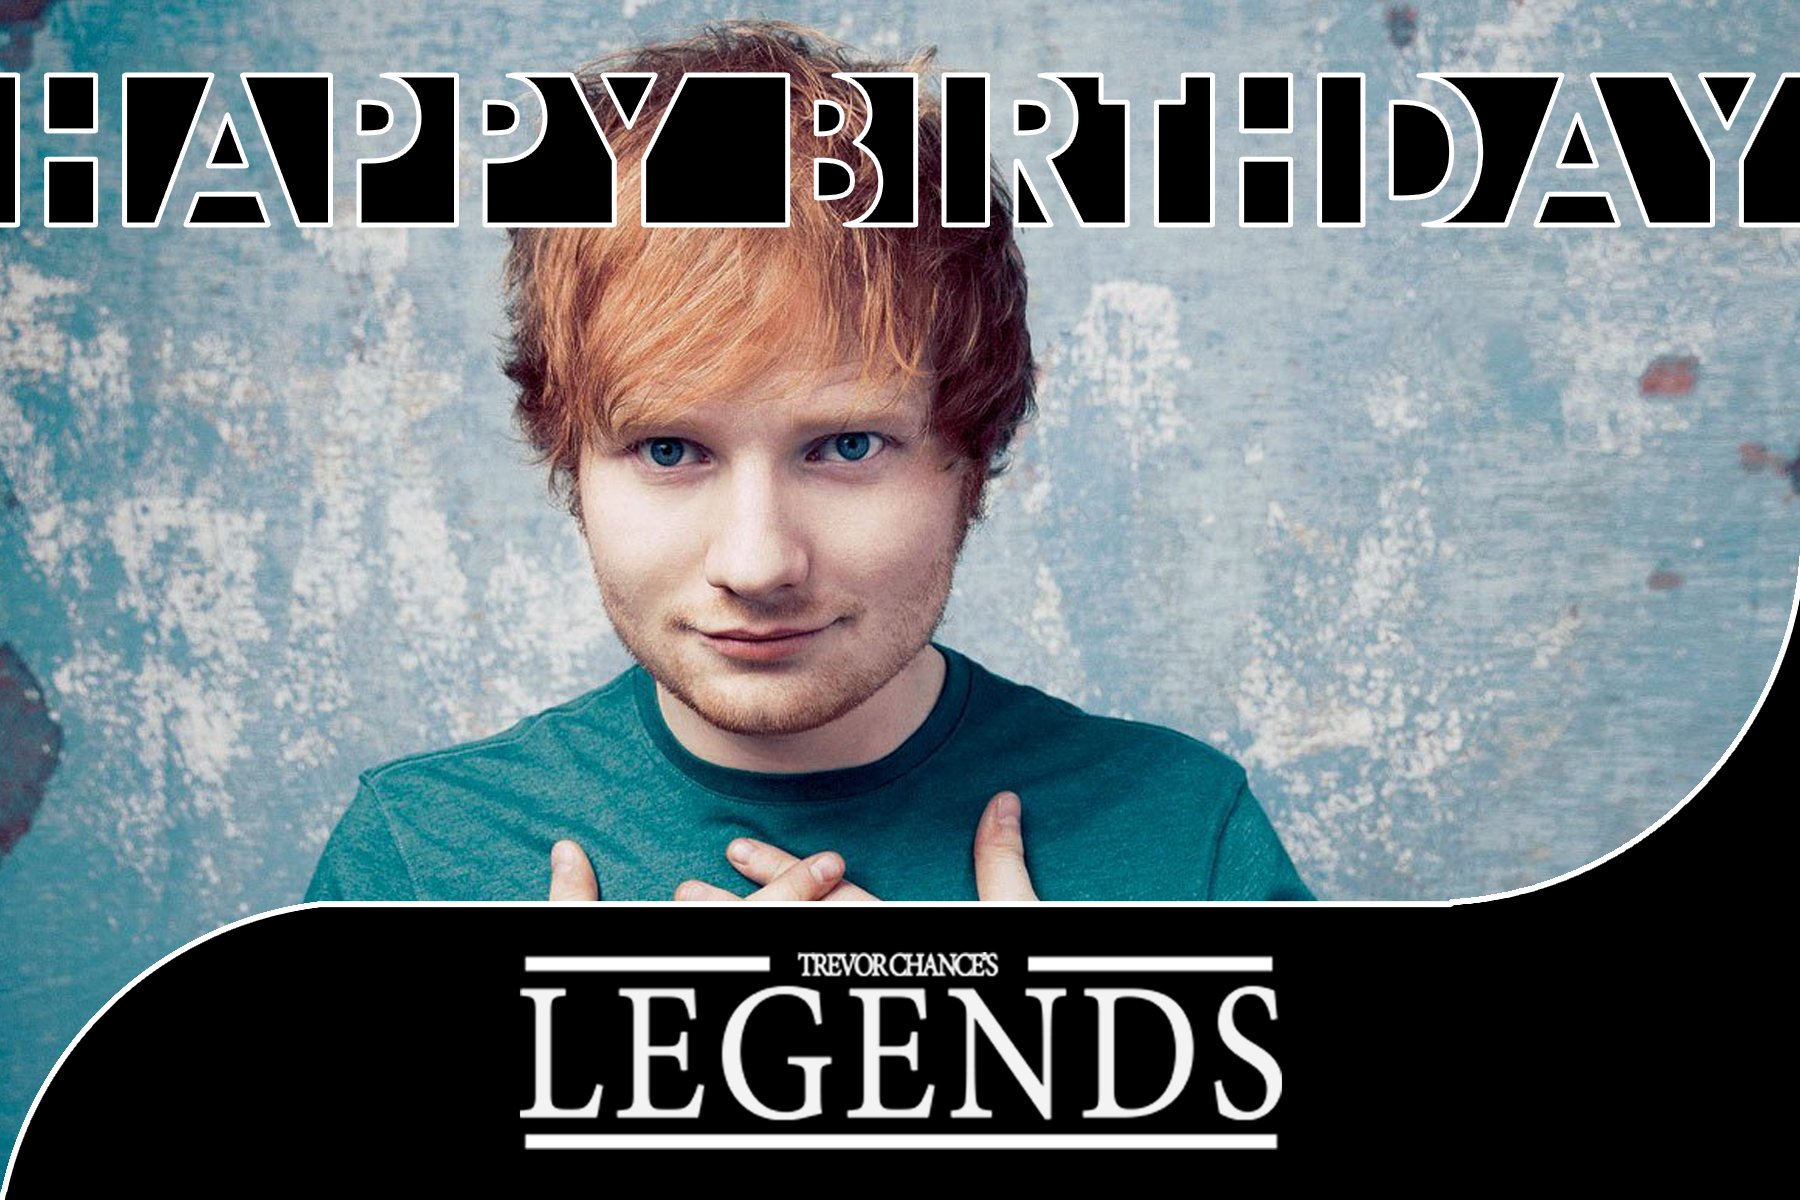 It\s Ed Sheeran\s birthday! He\s 26 today! Happy Birthday, Ed... 